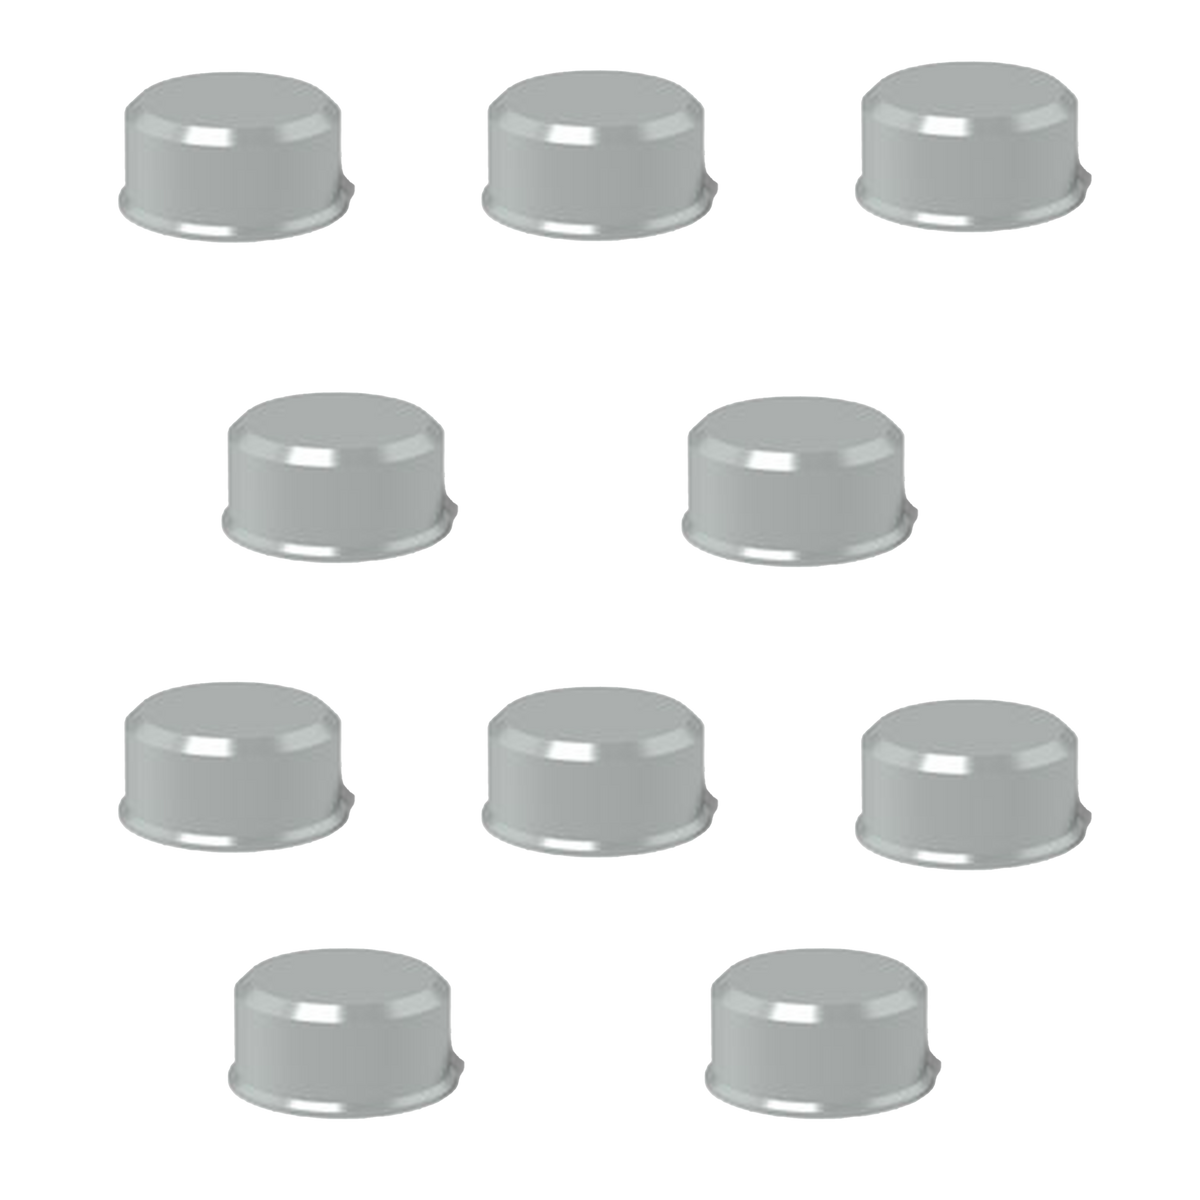 2-160238.10: Steel Cover Cap (Pack of 10)